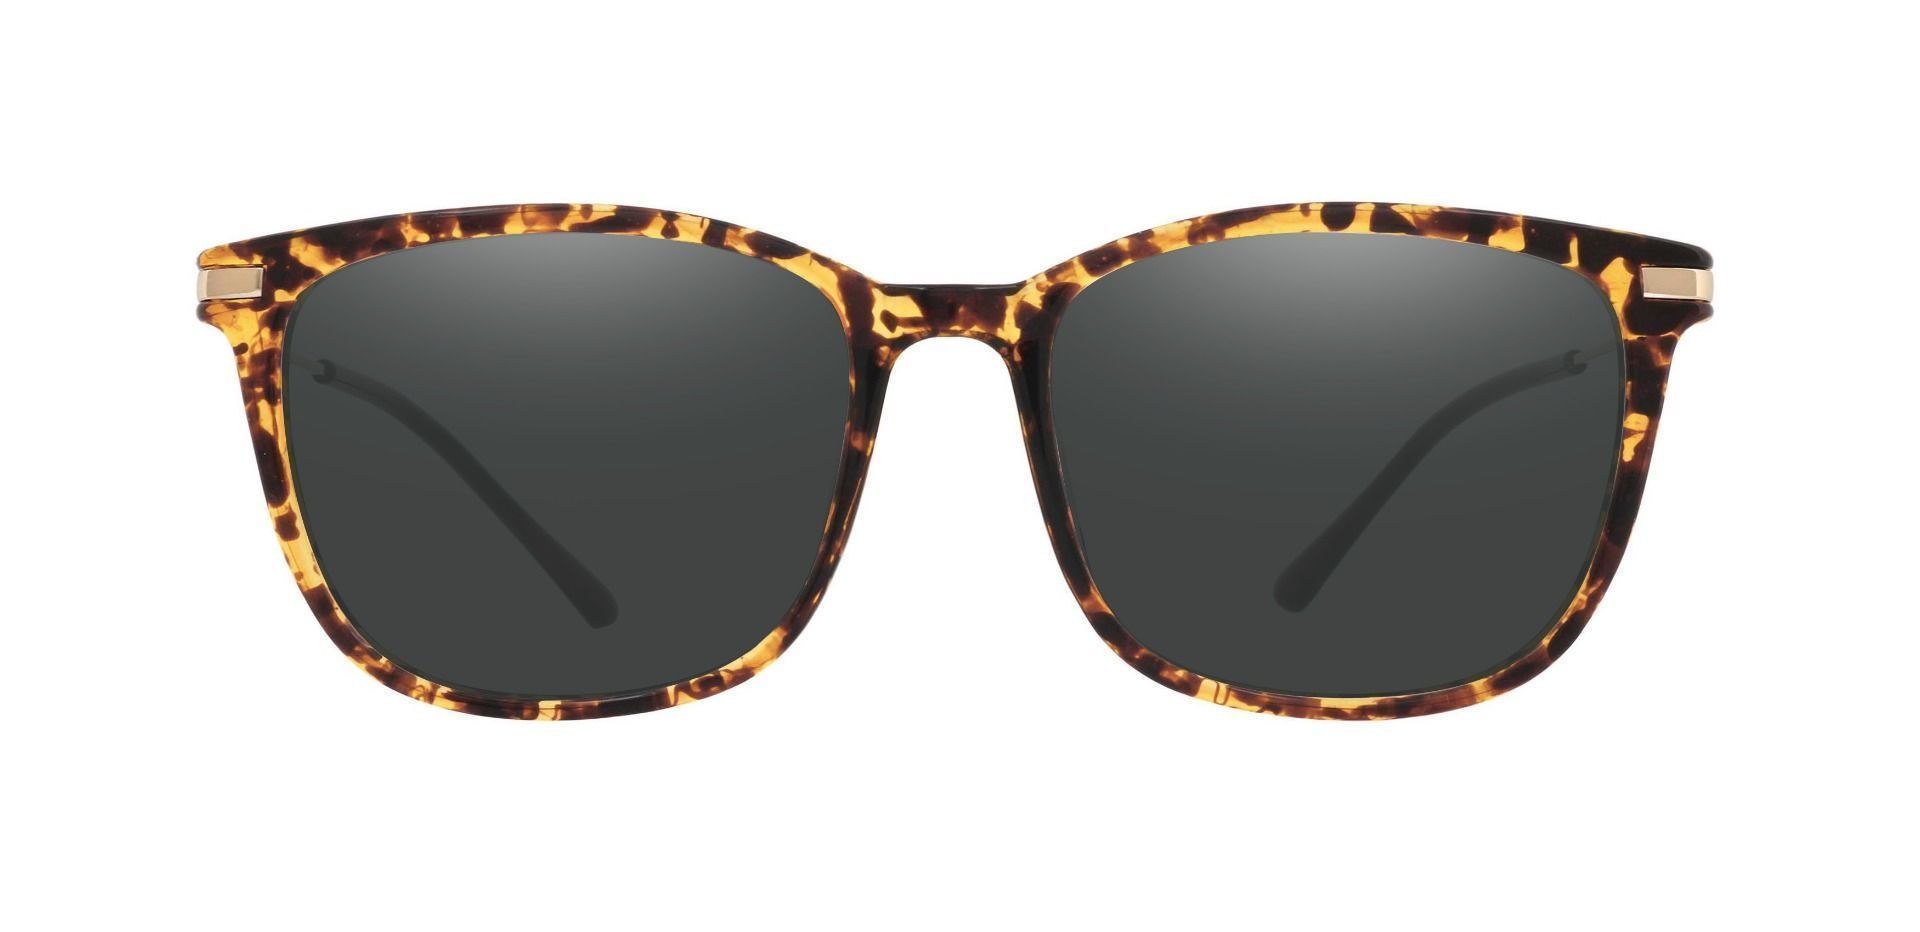 Katie square Prescription Sunglasses - Tortoise Frame With Gray Lenses